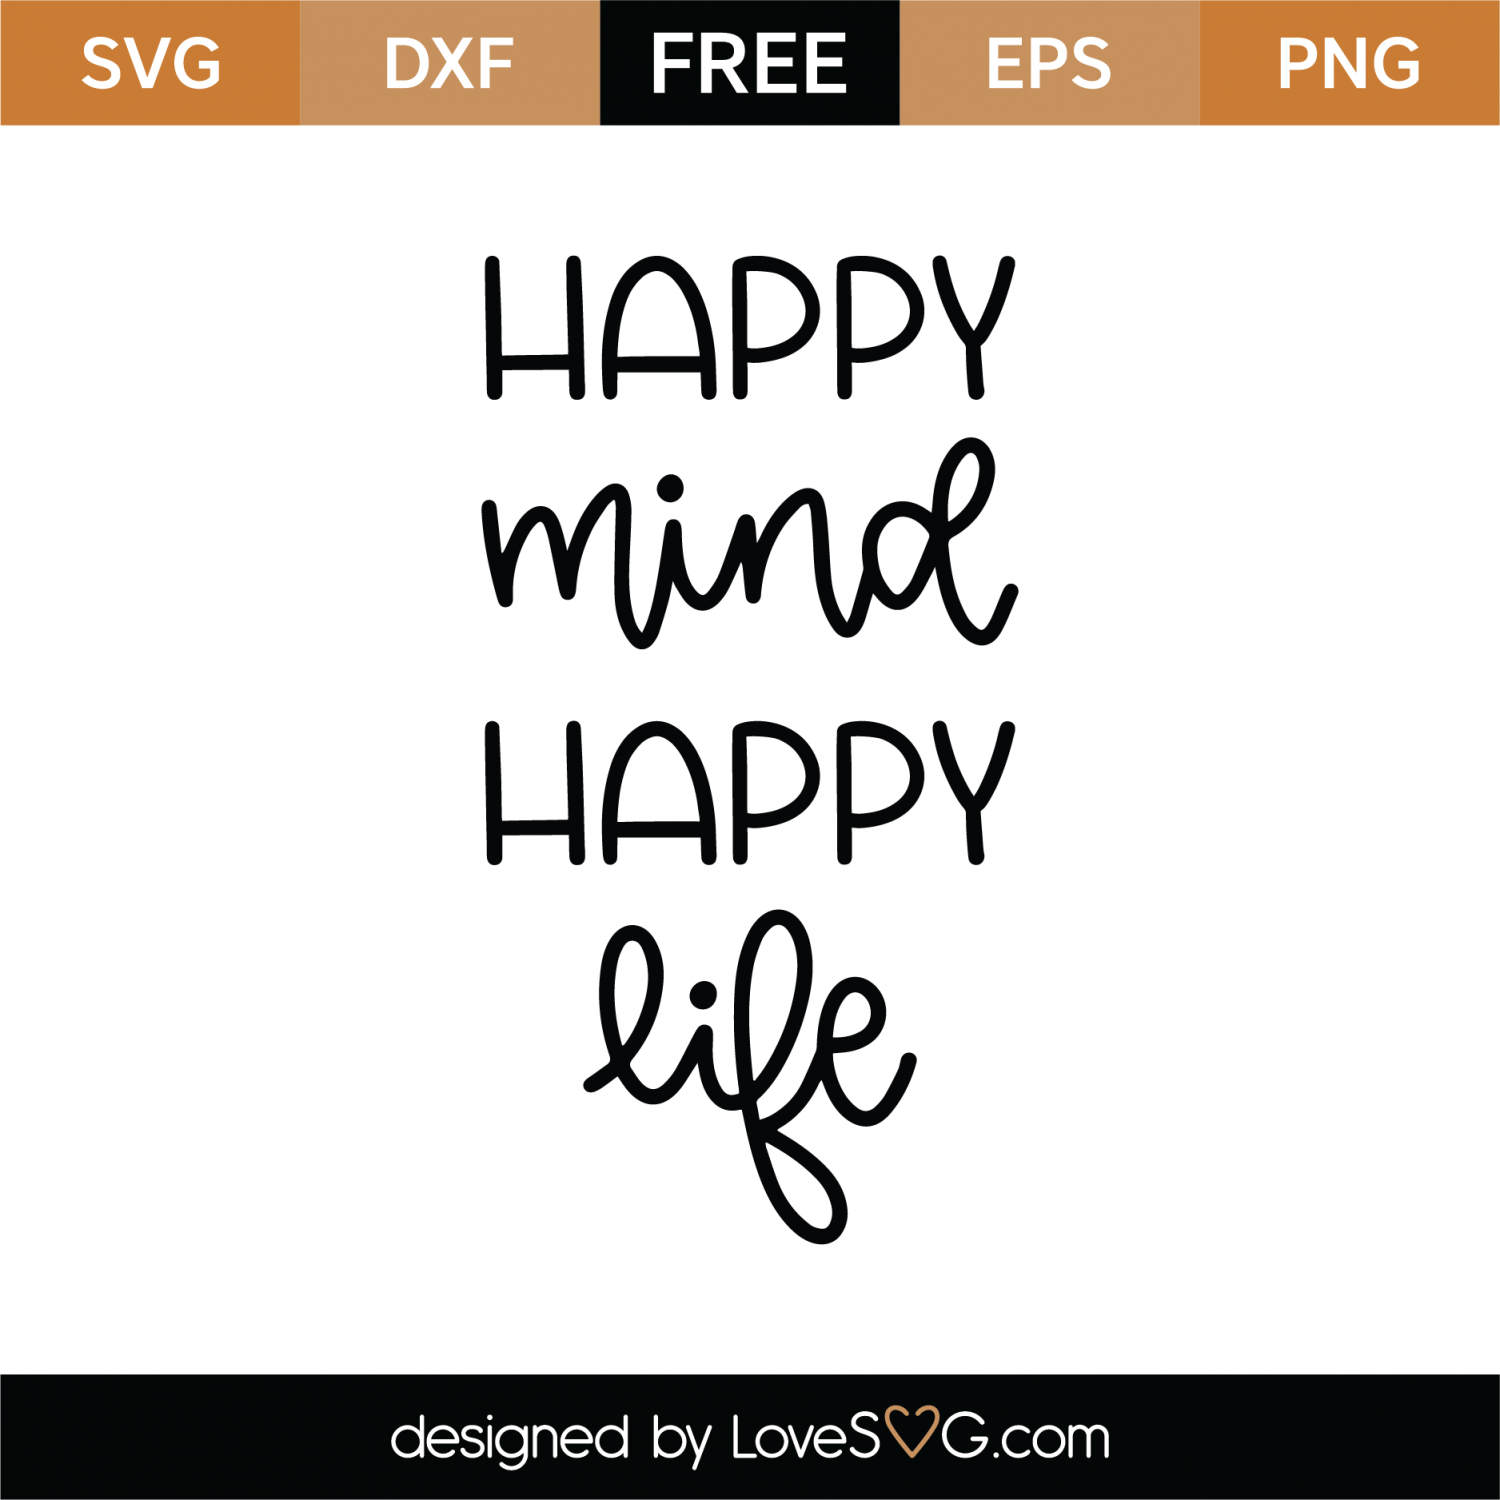 Download Free Happy Mind Happy Life SVG Cut File | Lovesvg.com